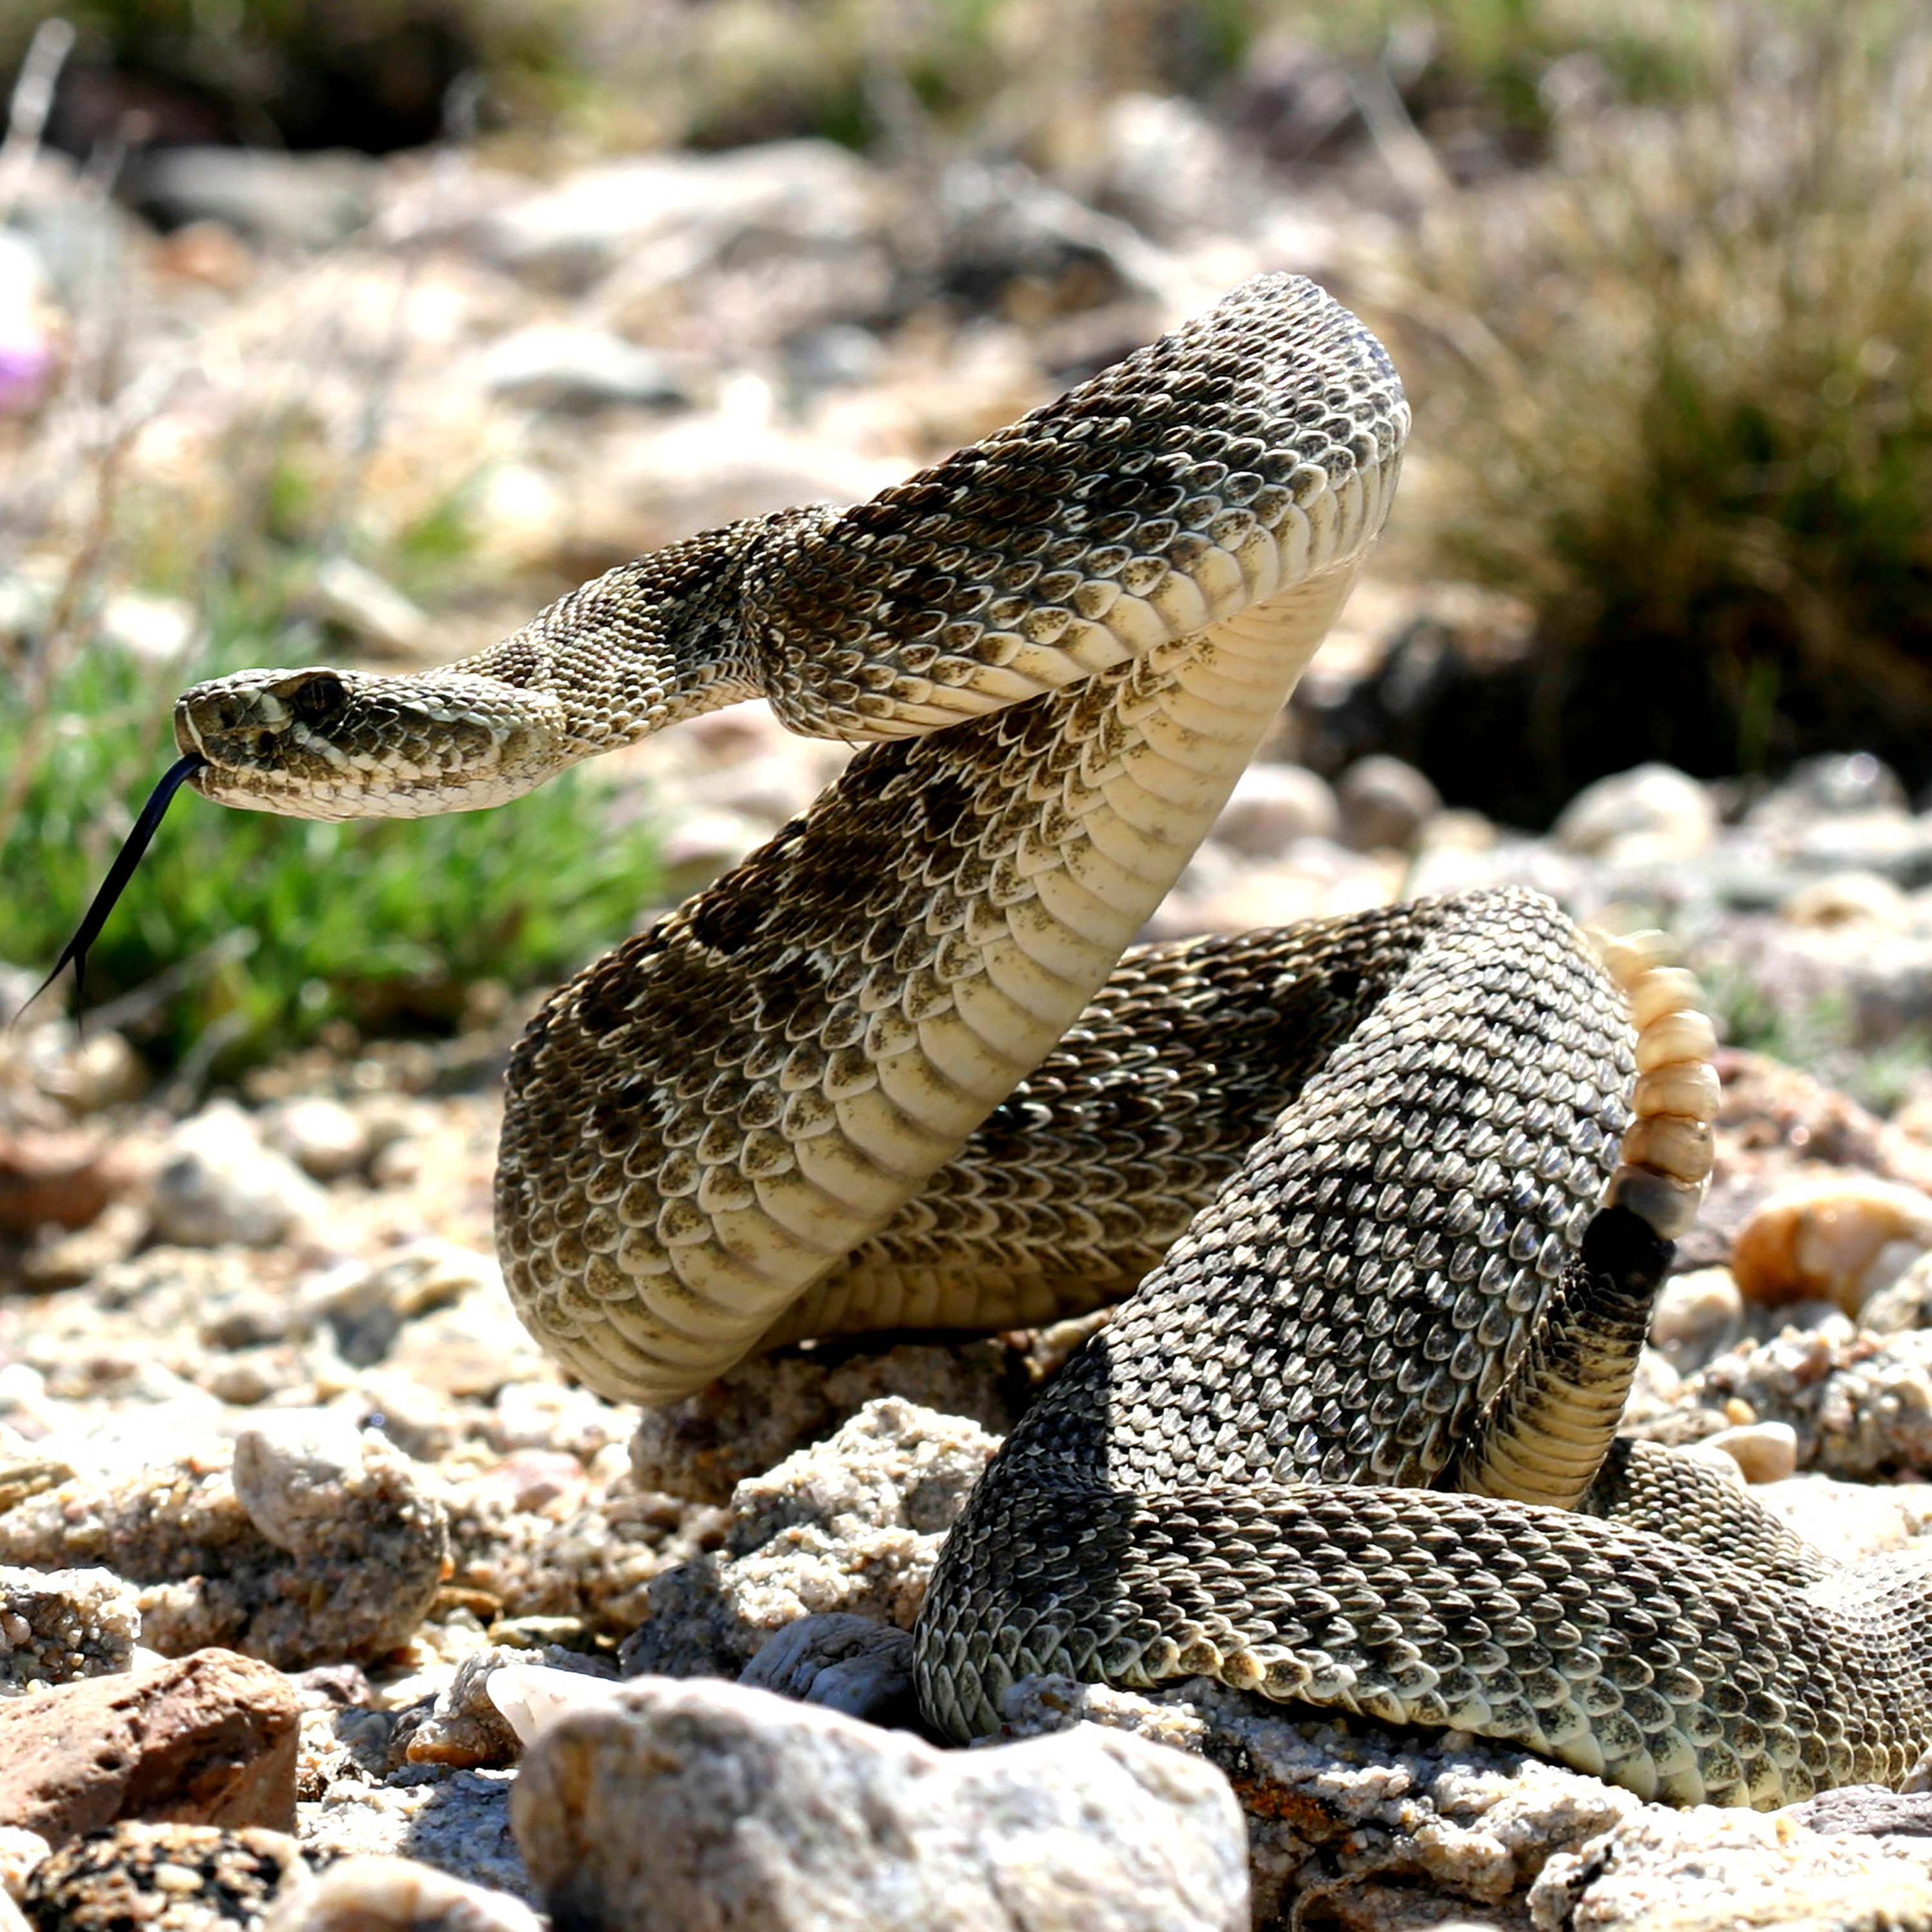 S1E28: 1.28 - Rattlesnakes - April 27, 2022